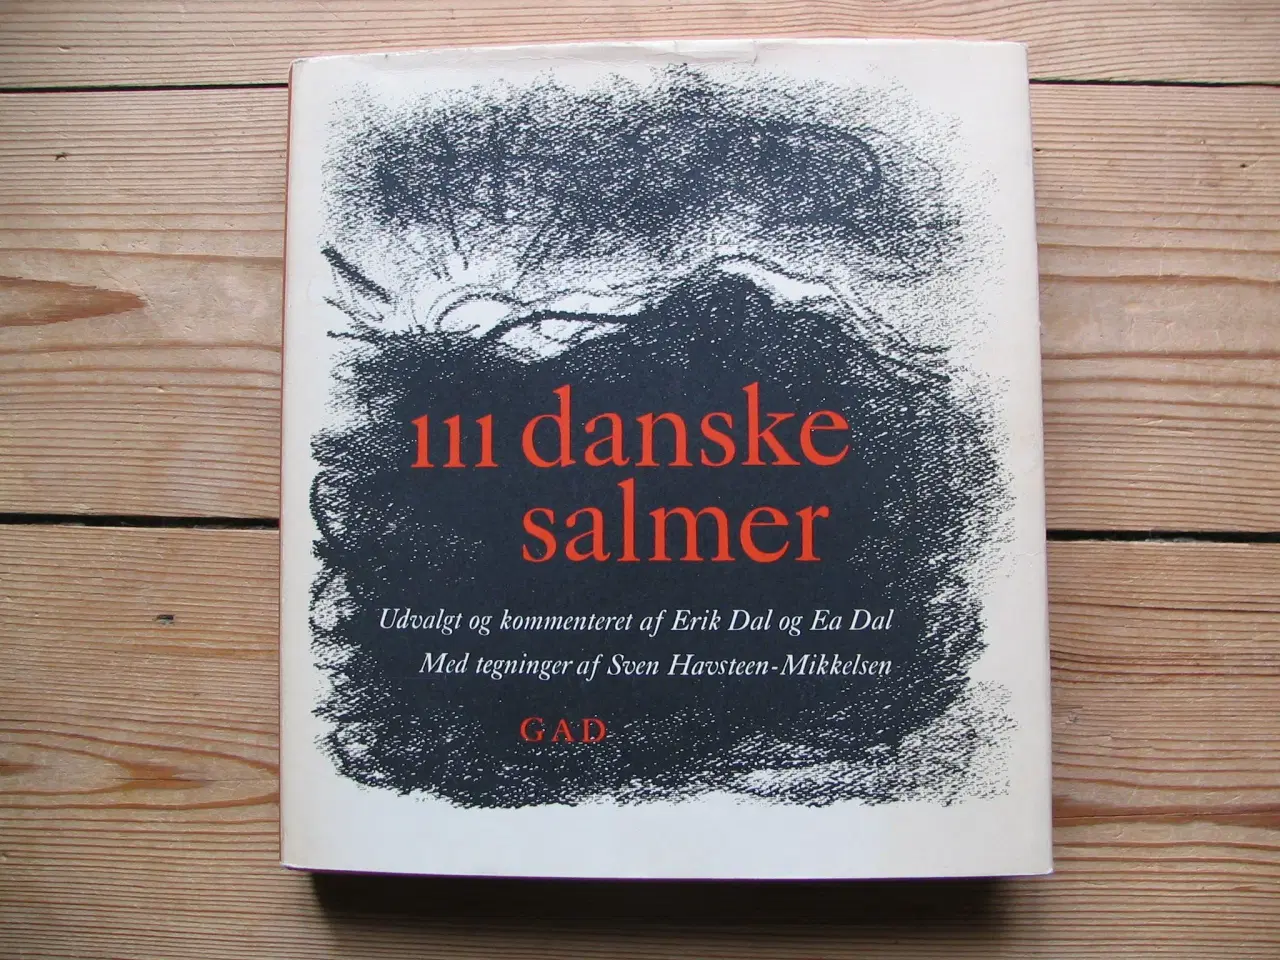 Billede 1 - 111 danske salmer